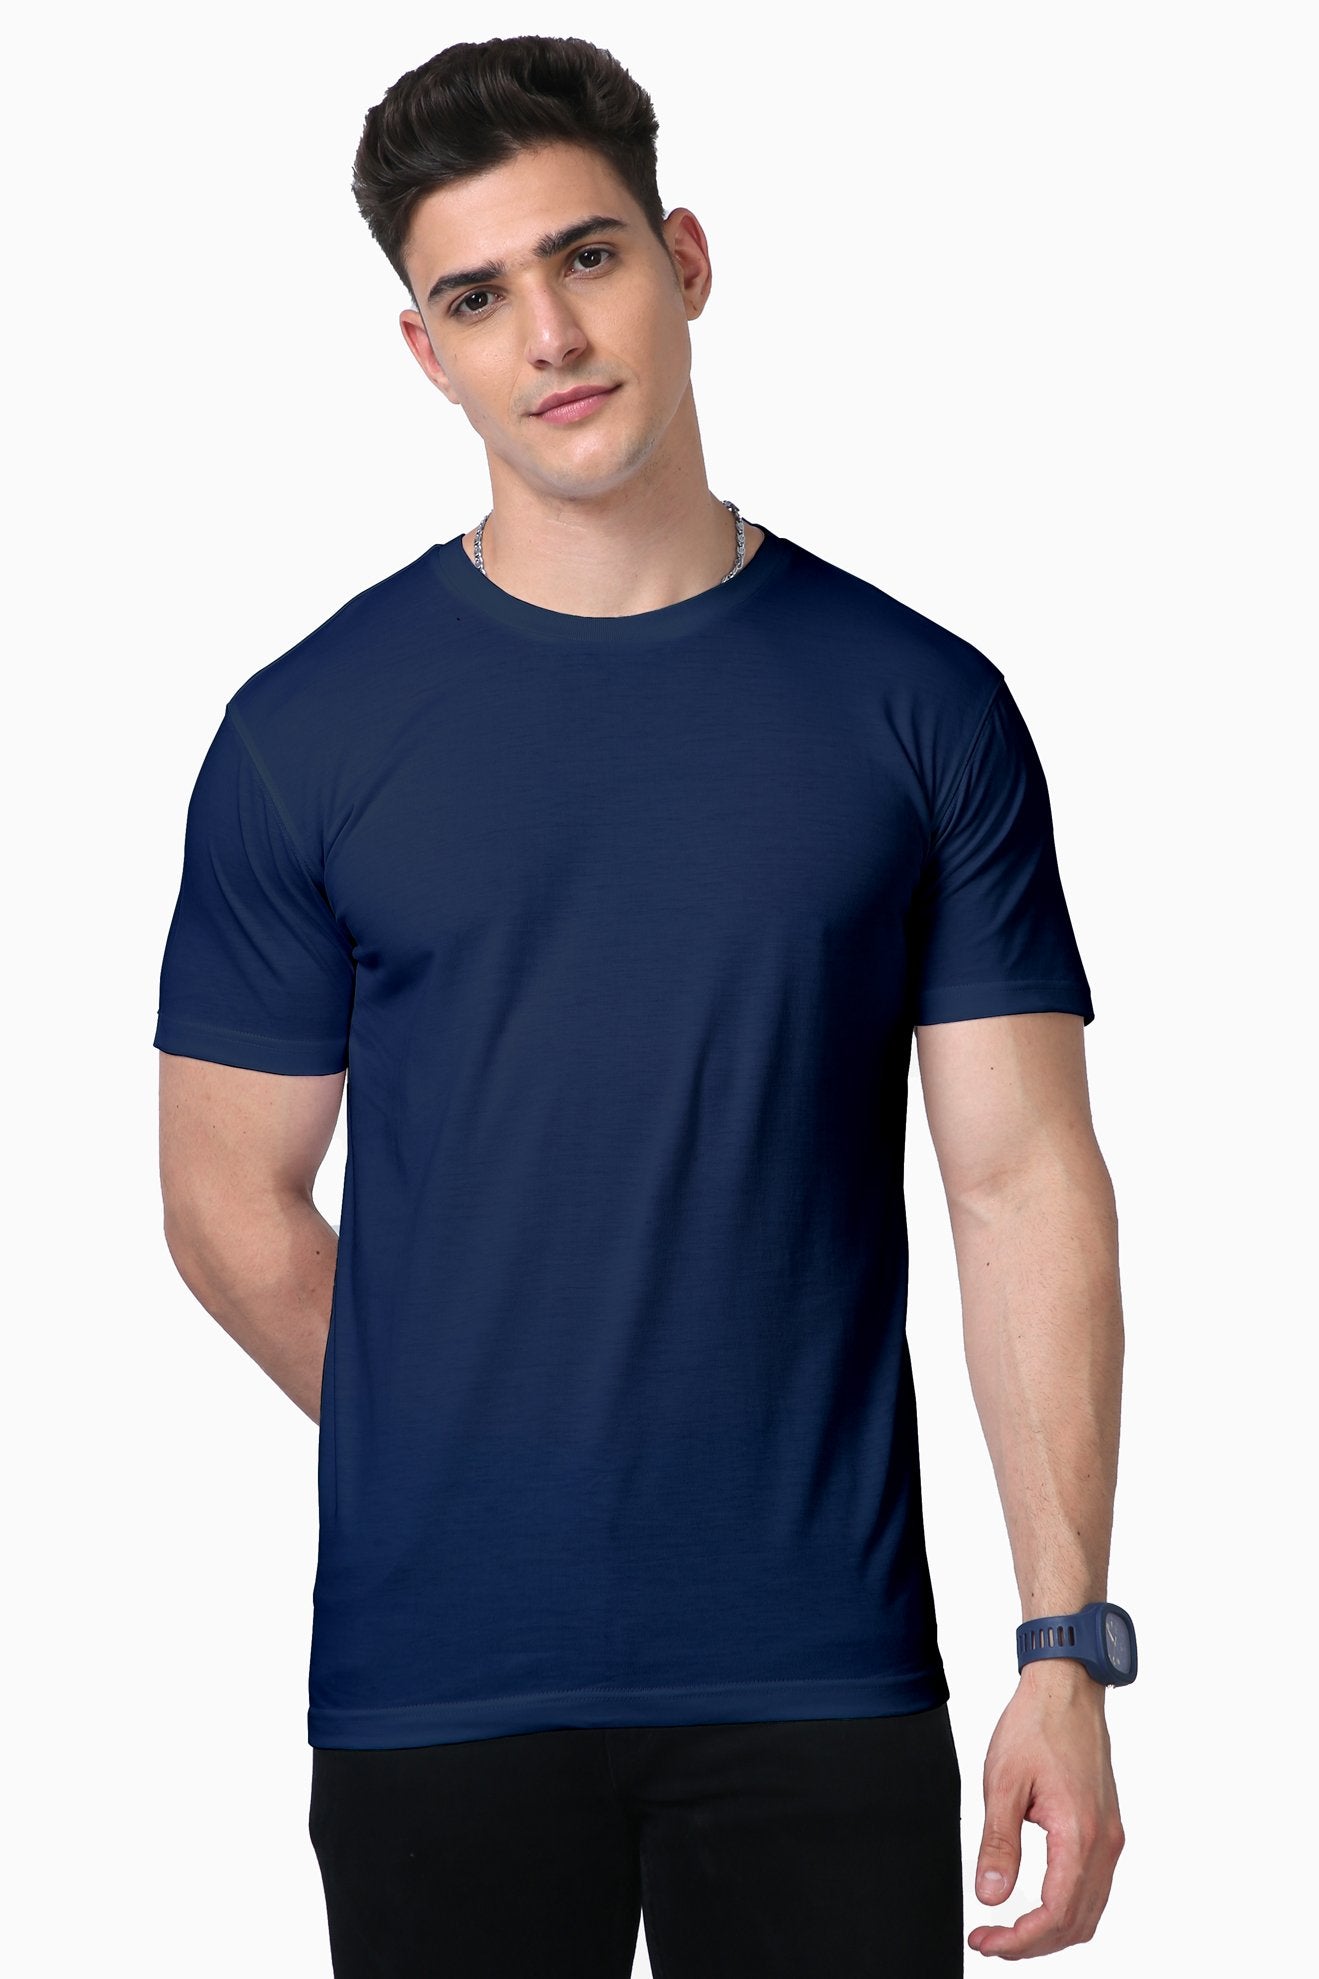 Unisex Supima T-Shirts - The Minies